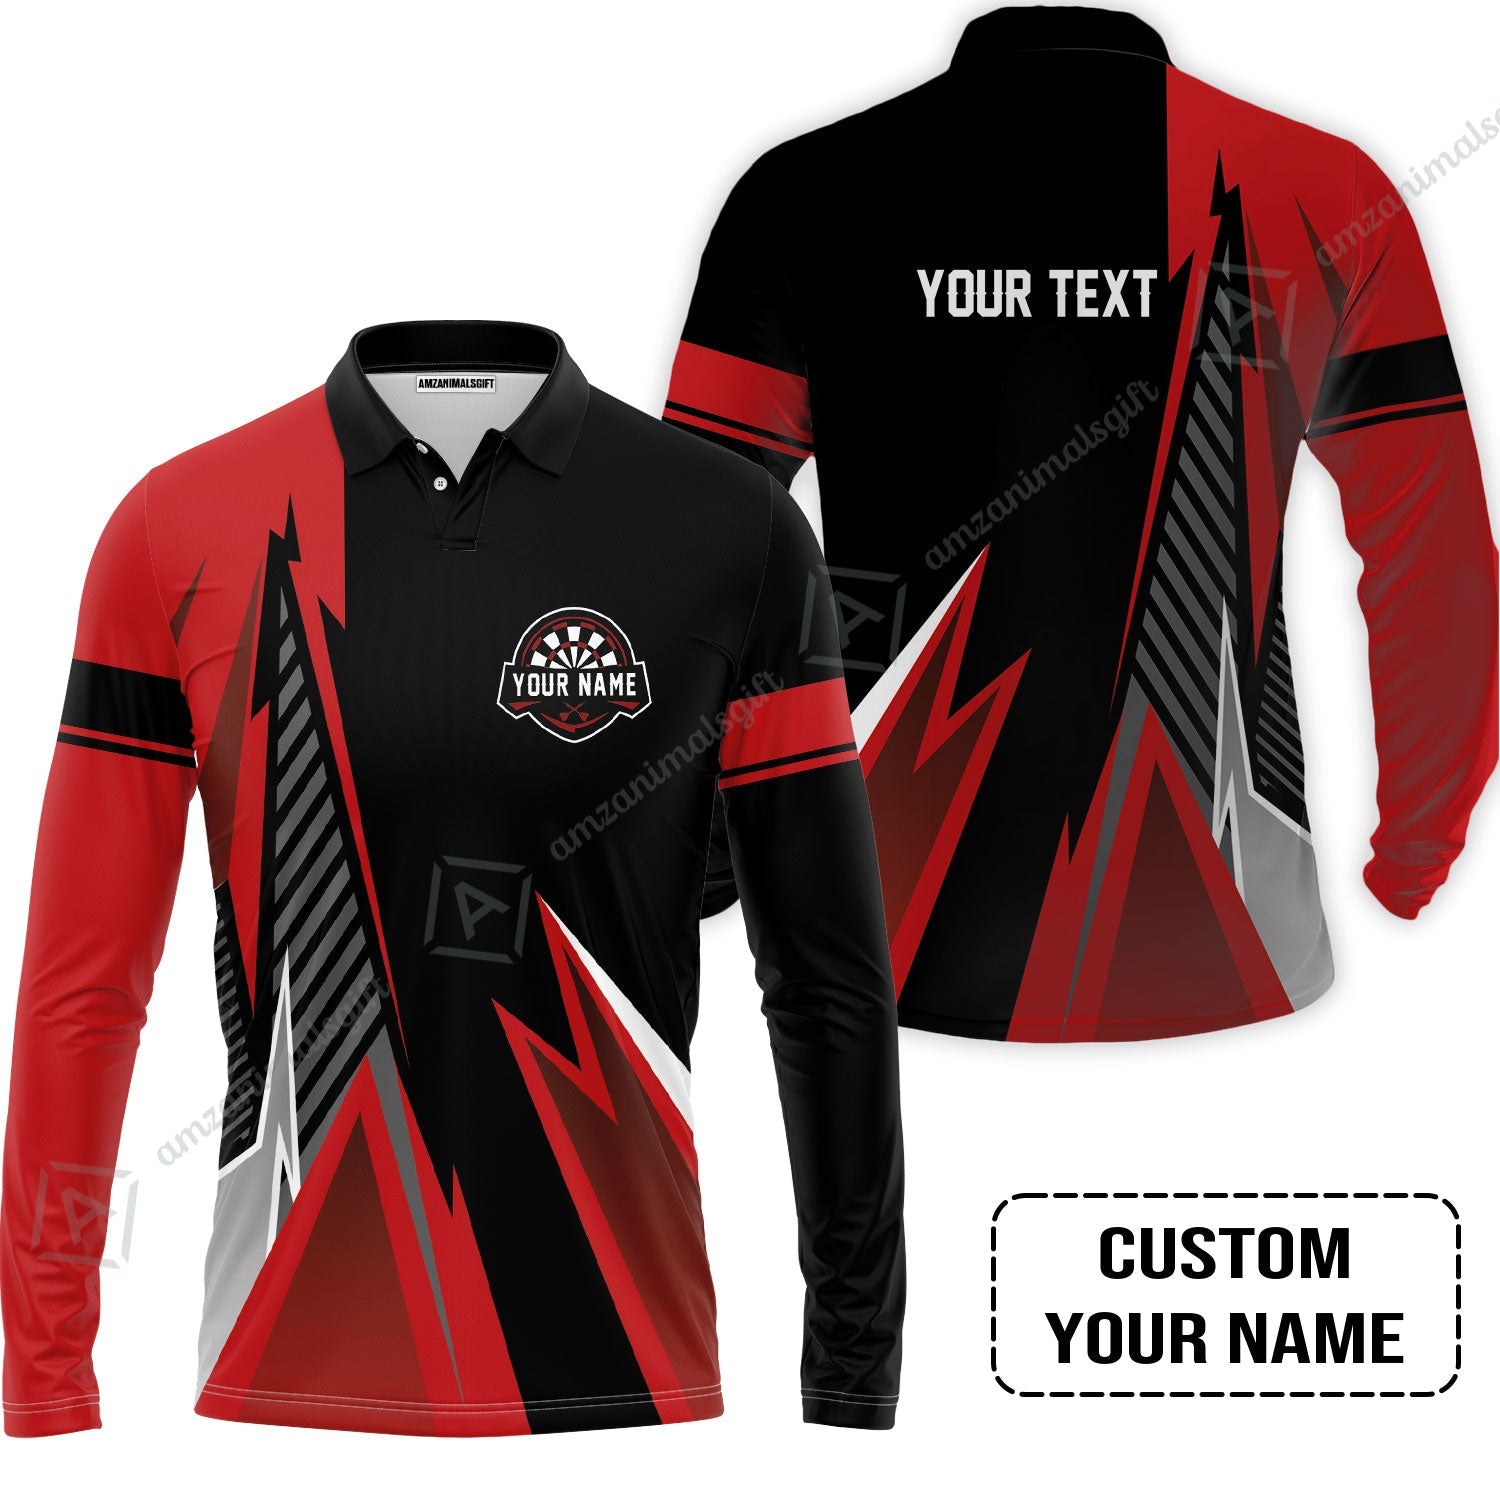 Customized Name & Text Darts Long Polo Shirt, Personalized Name Darts Long Polo Shirt